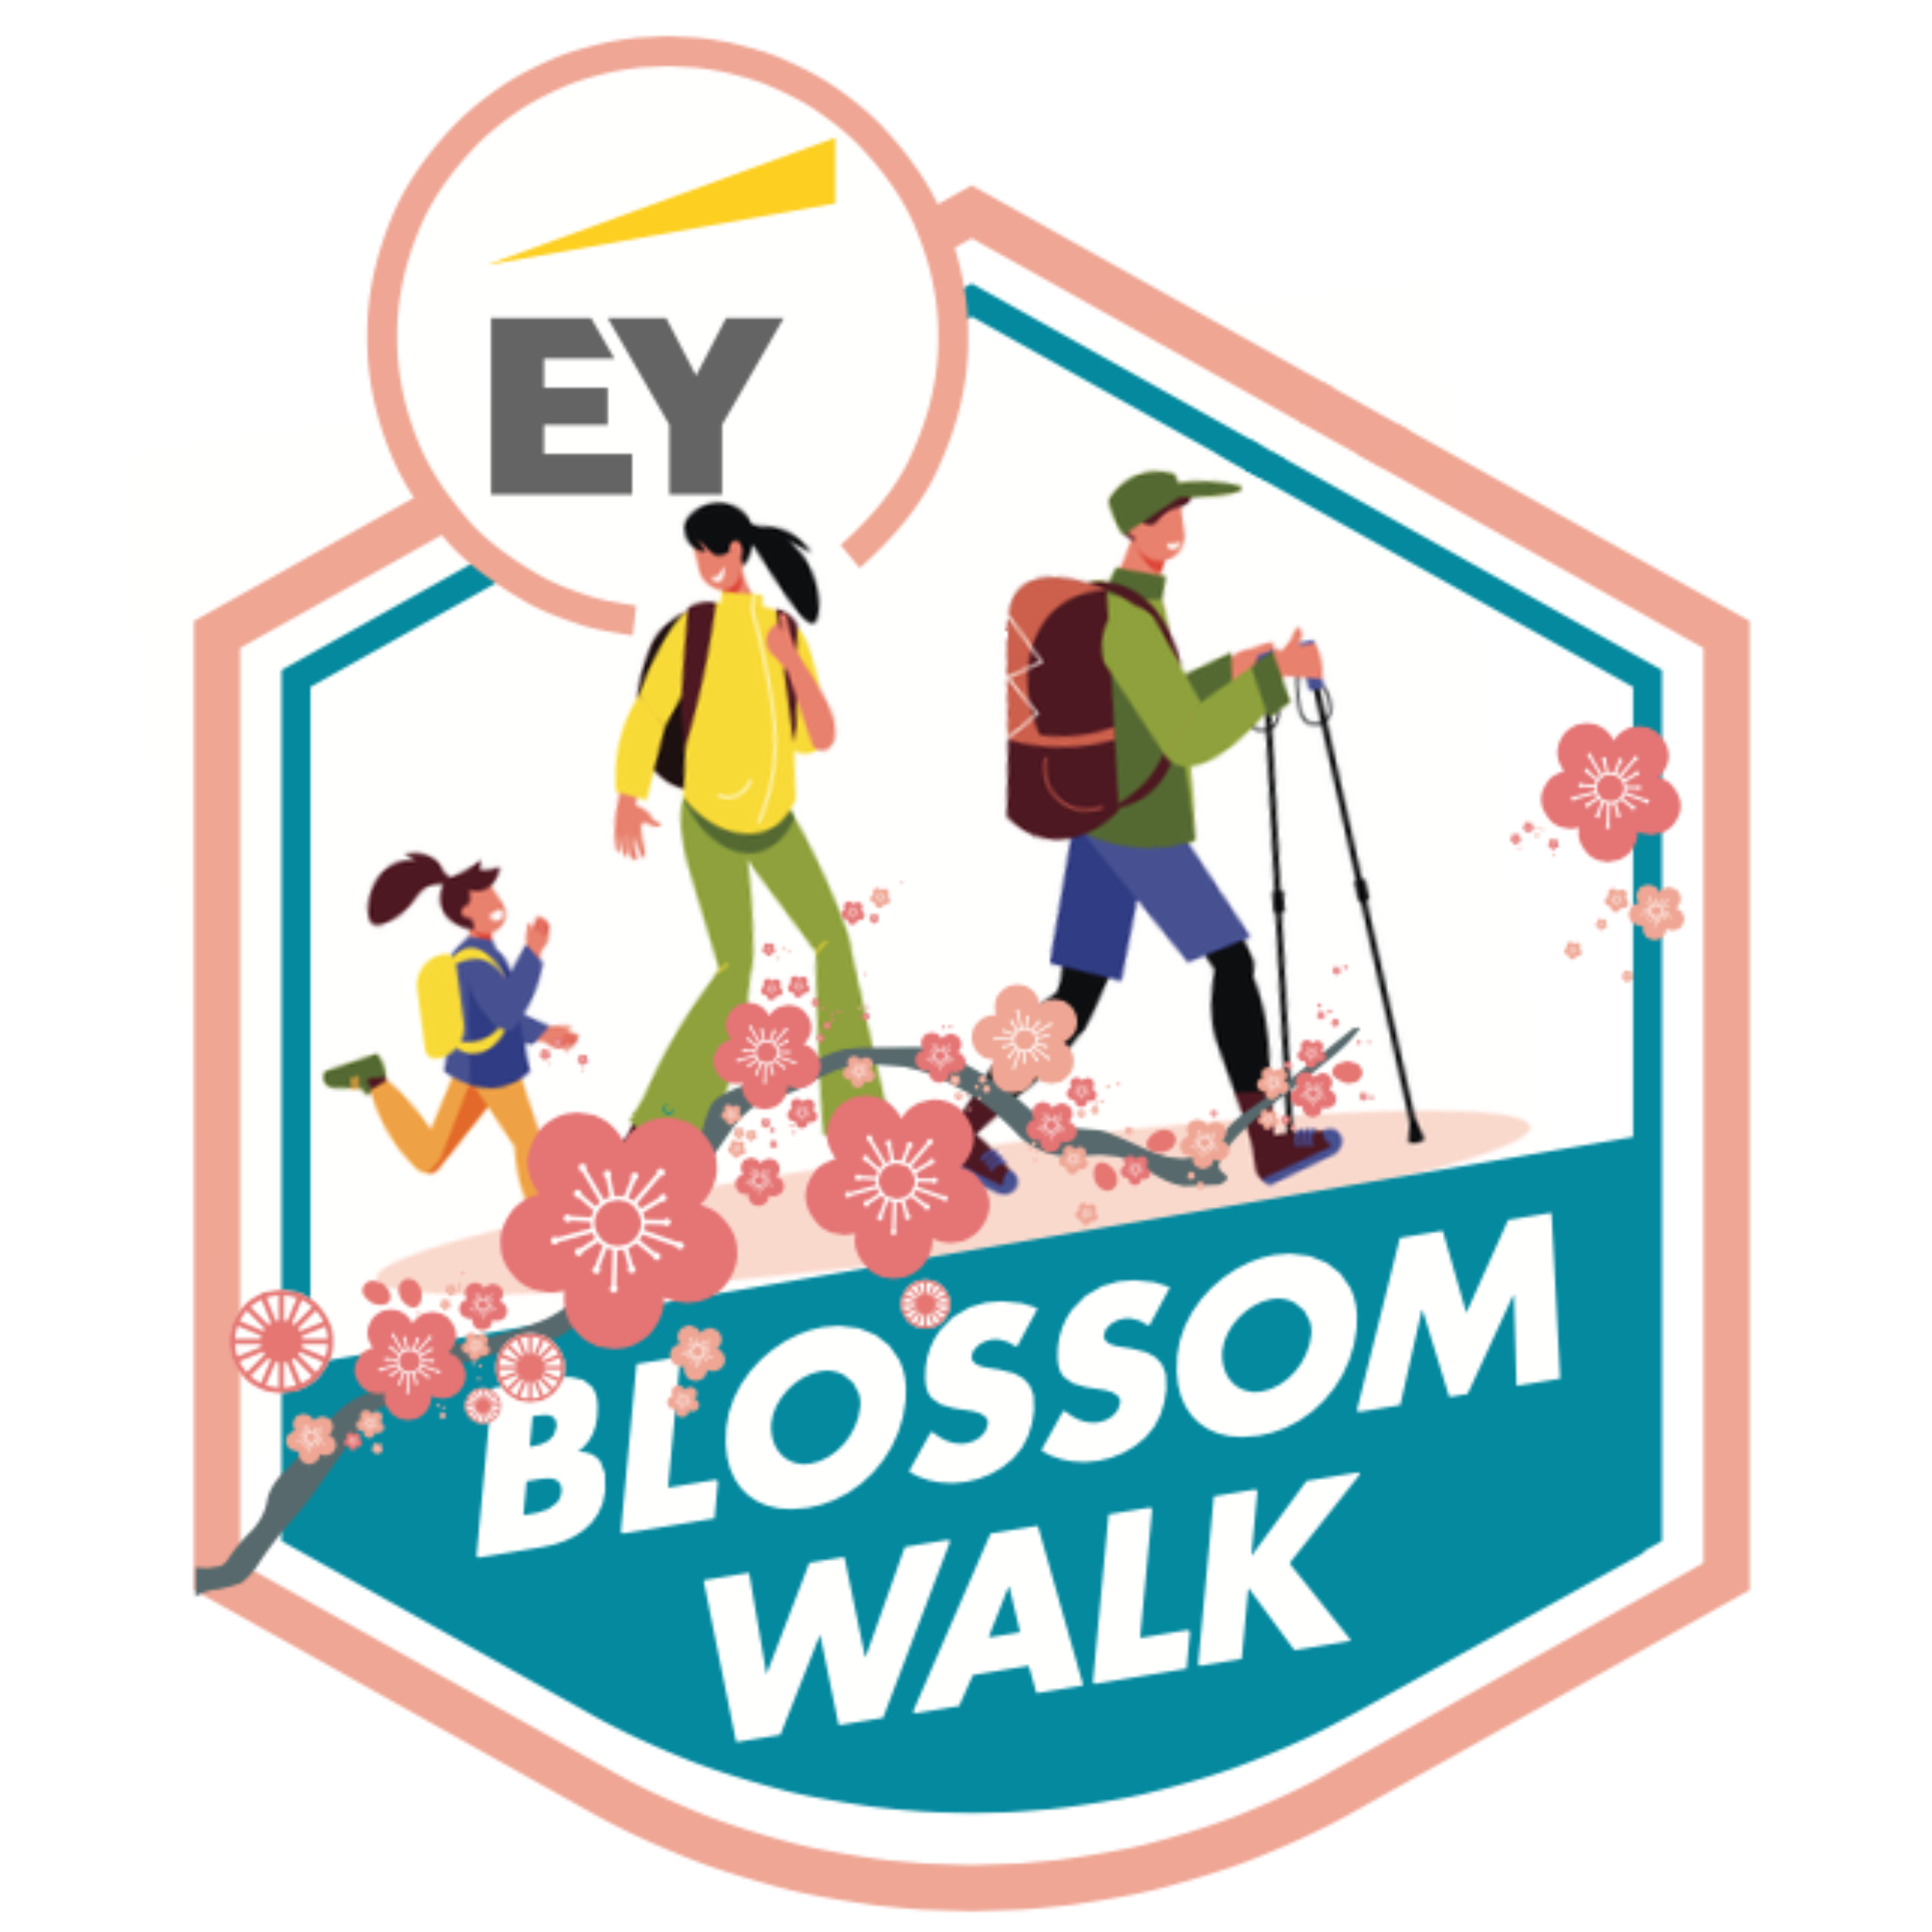 EY Blossom Family walk